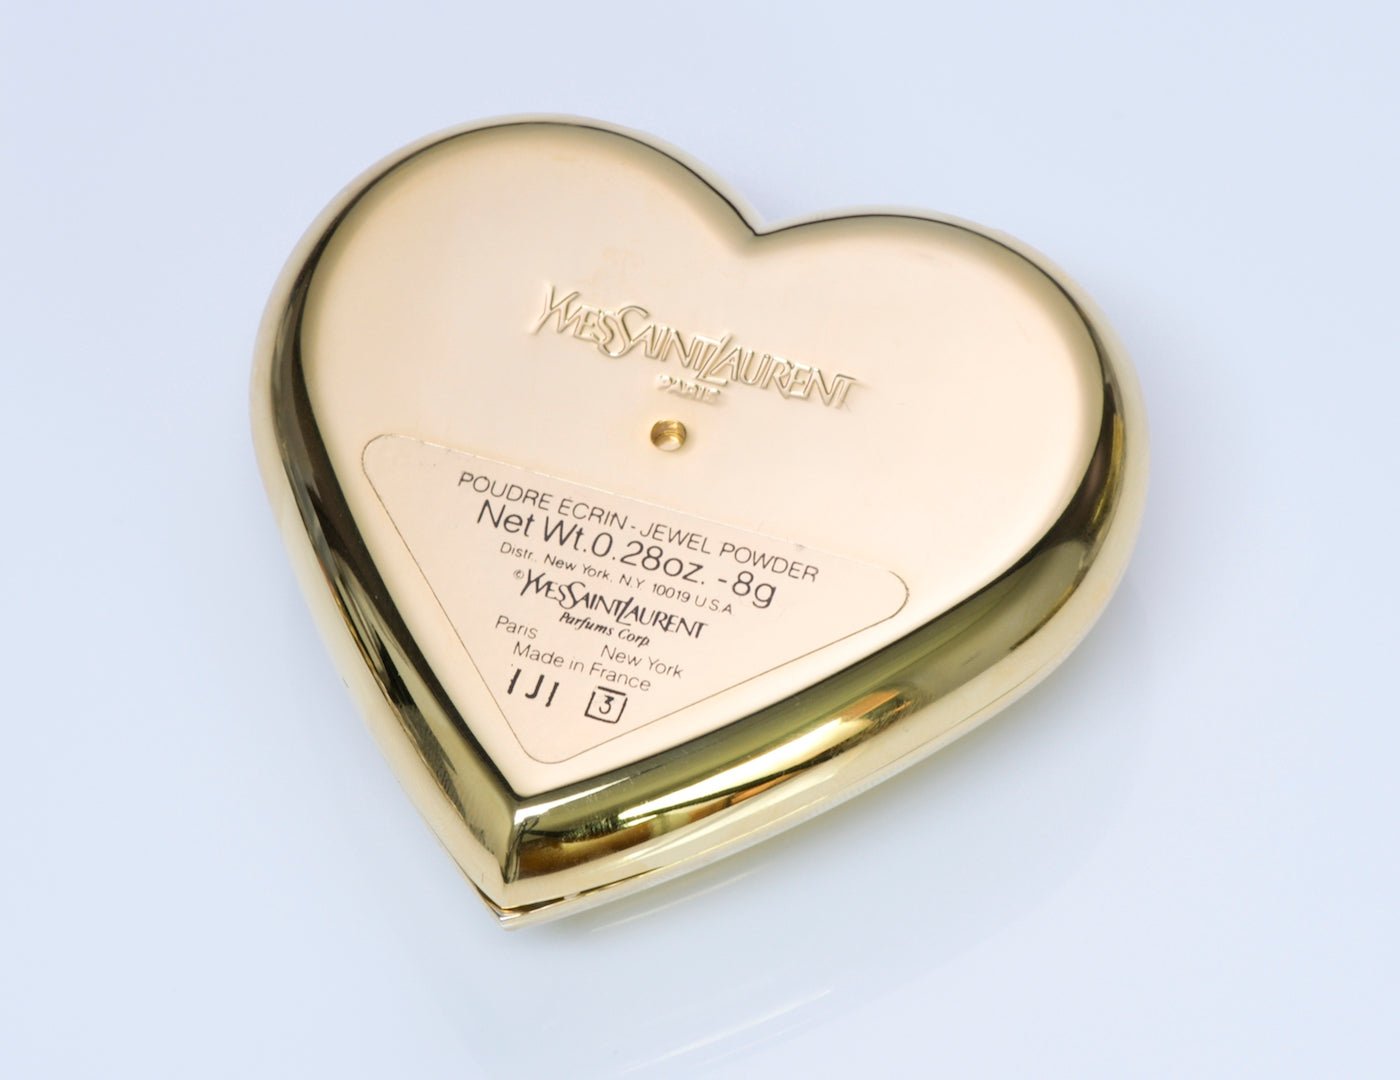 Yves Saint Laurent Heart Compact